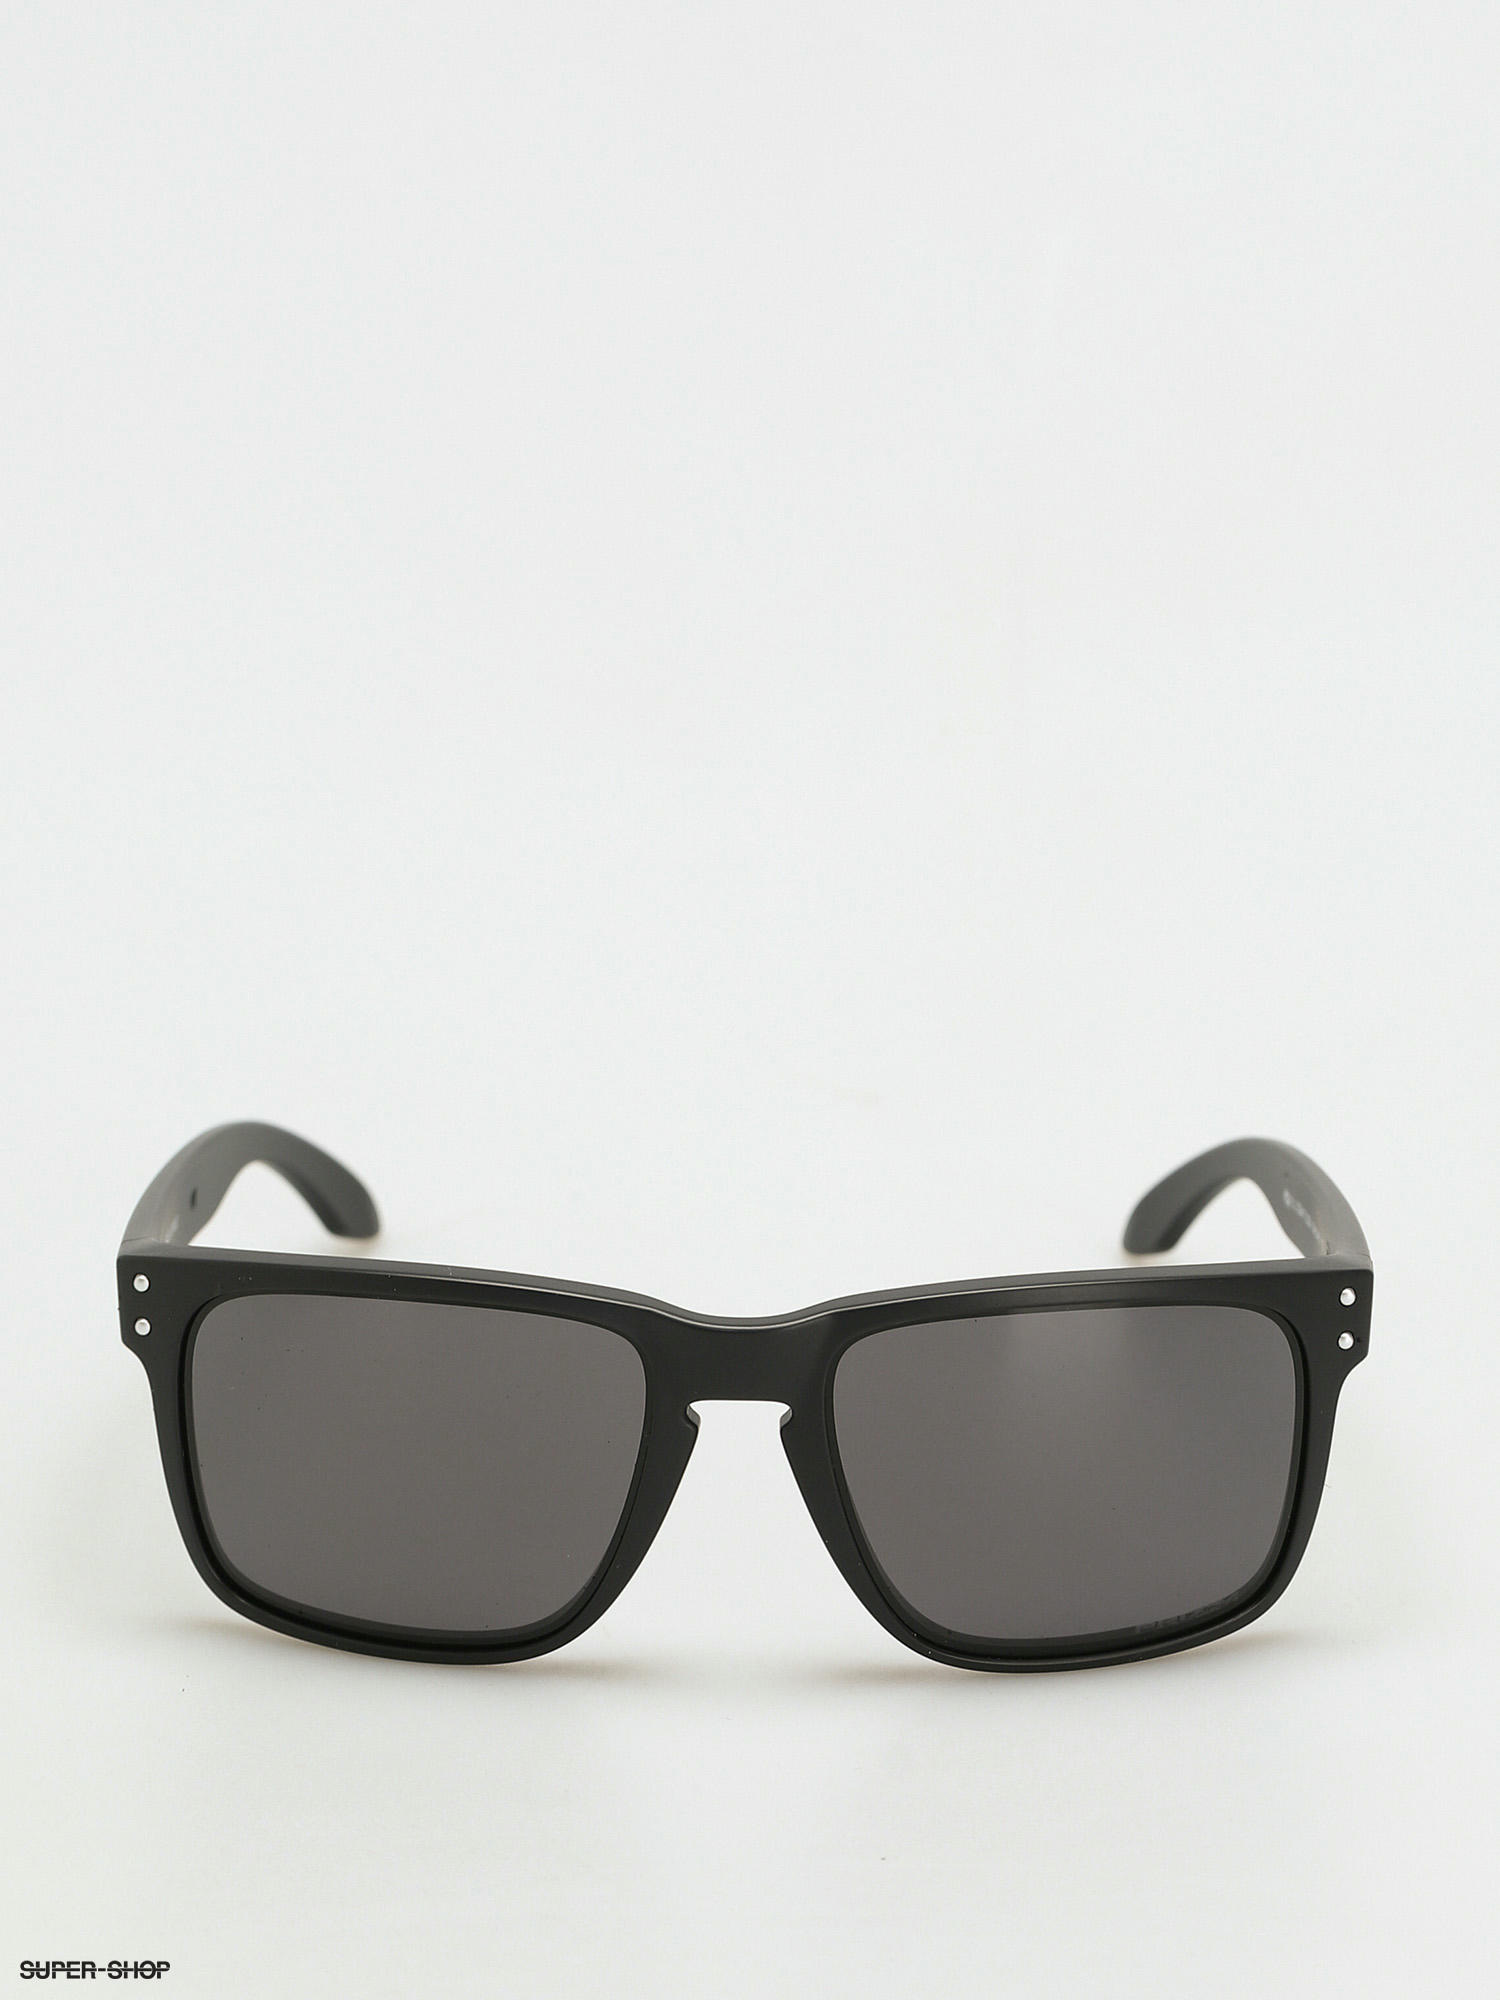 Oakley Holbrook XL Sunglasses (matte black/prizm grey)